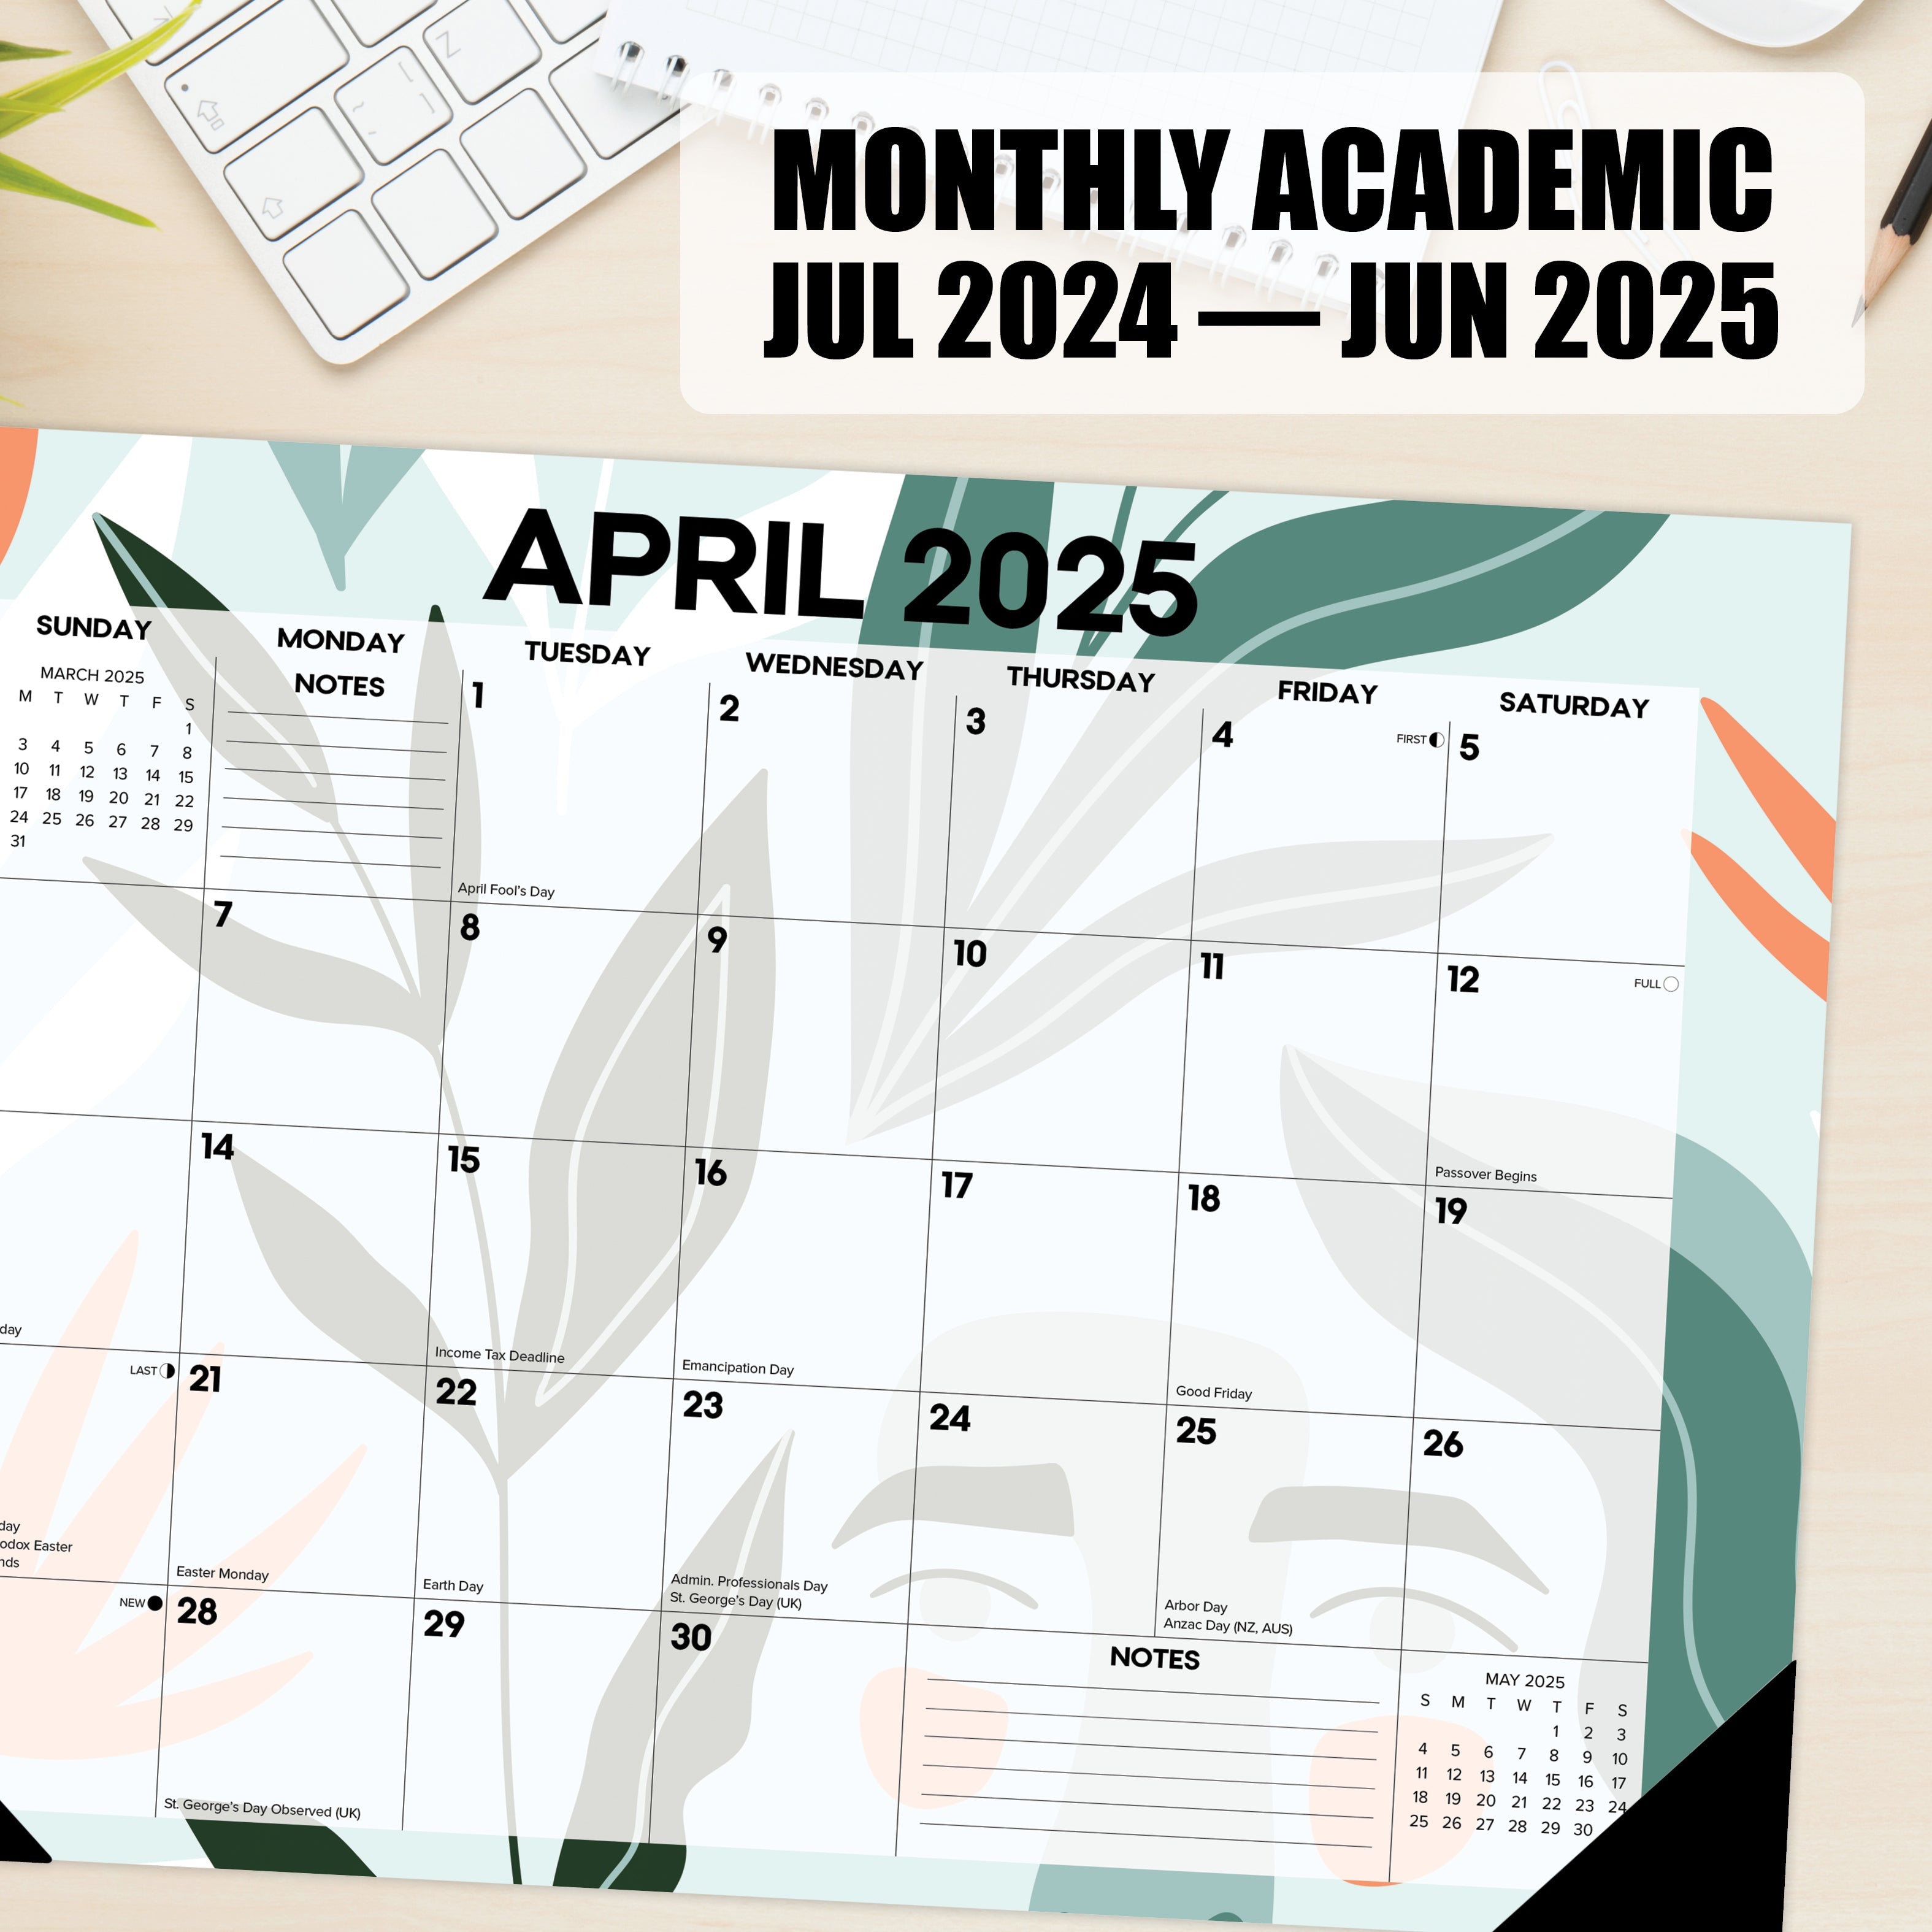 July 2024 - June 2025 Botanical Bliss - Medium Monthly Desk Pad Academic Calendar